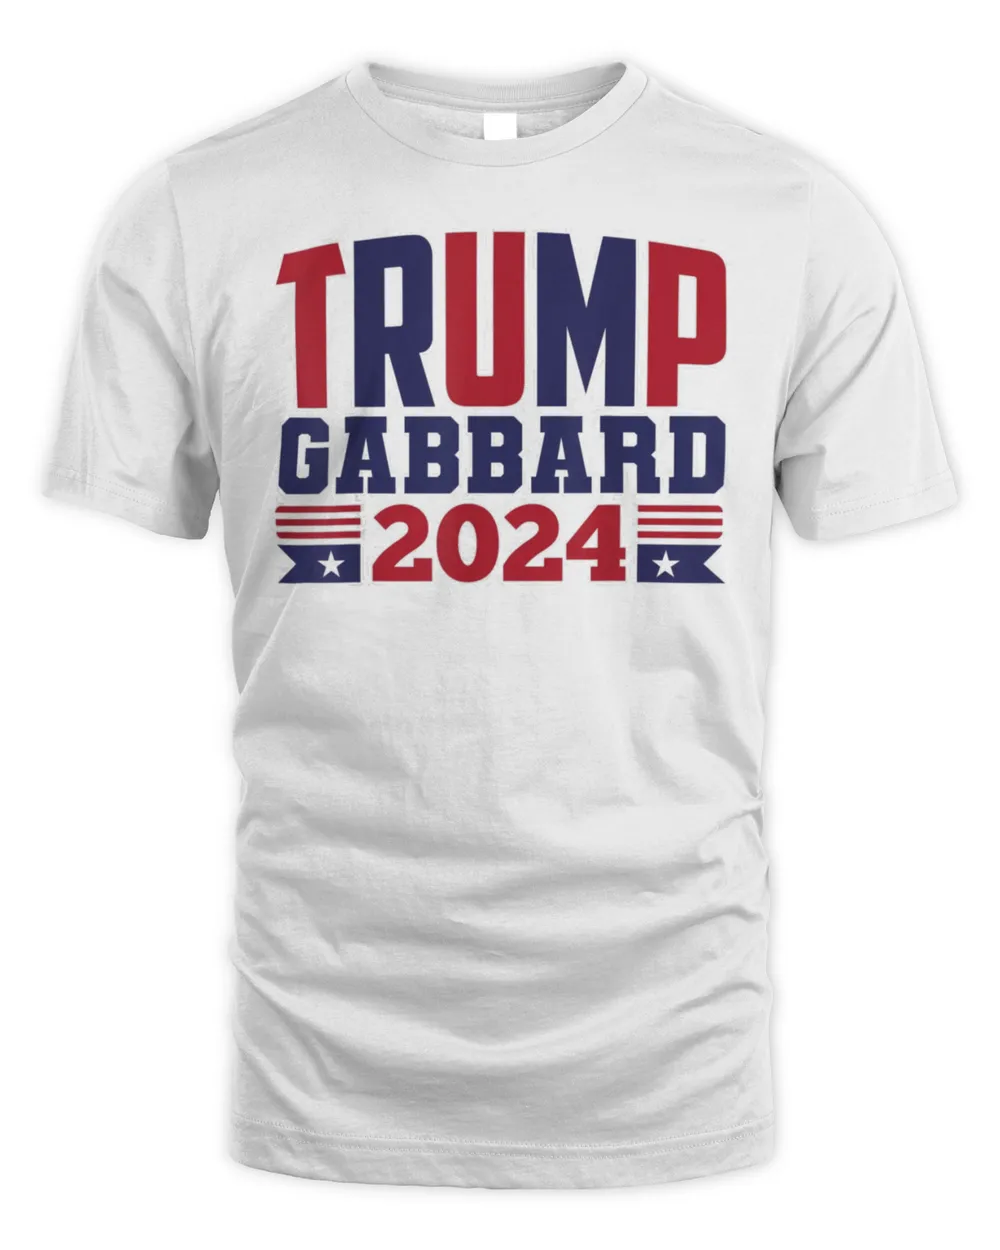 Trump Tulsi Gabbard 2024 Politic President T-Shirt